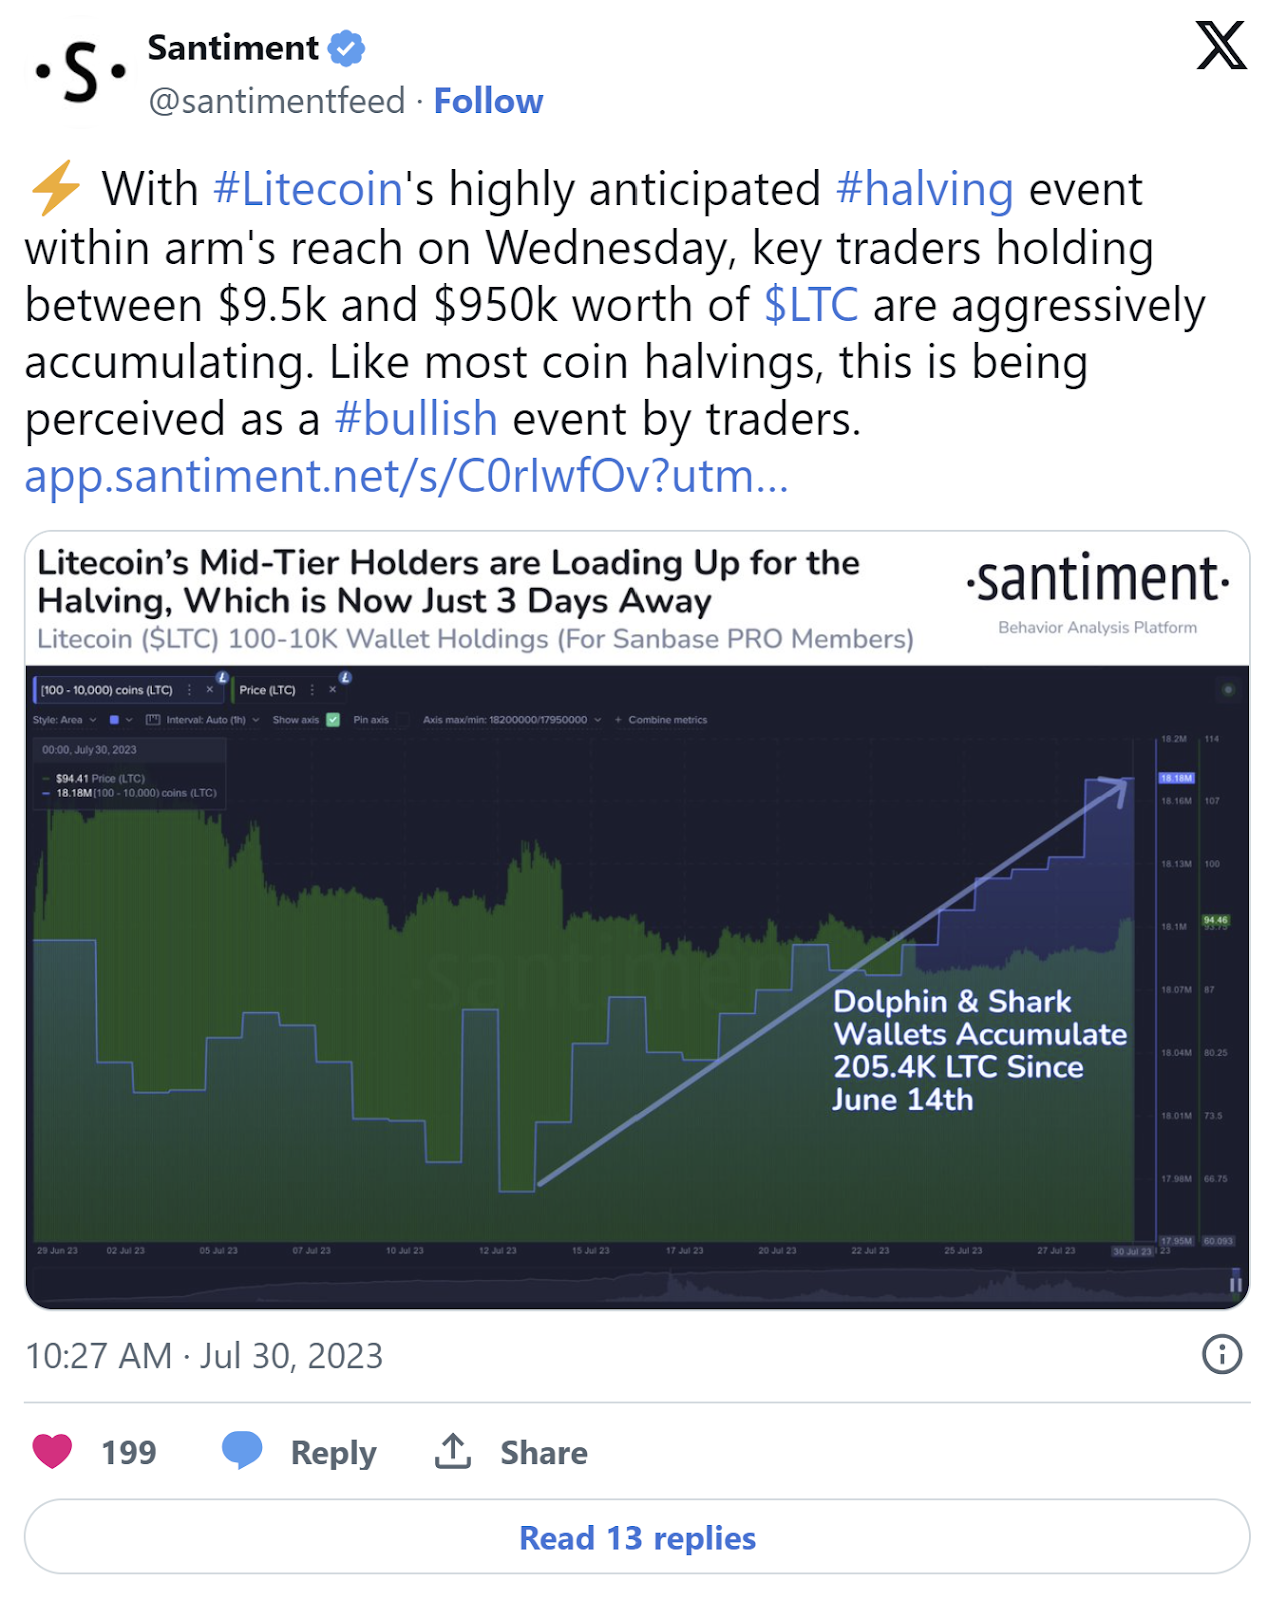 Tweet from Santiment Blockchain Bahavior Analysis Platform